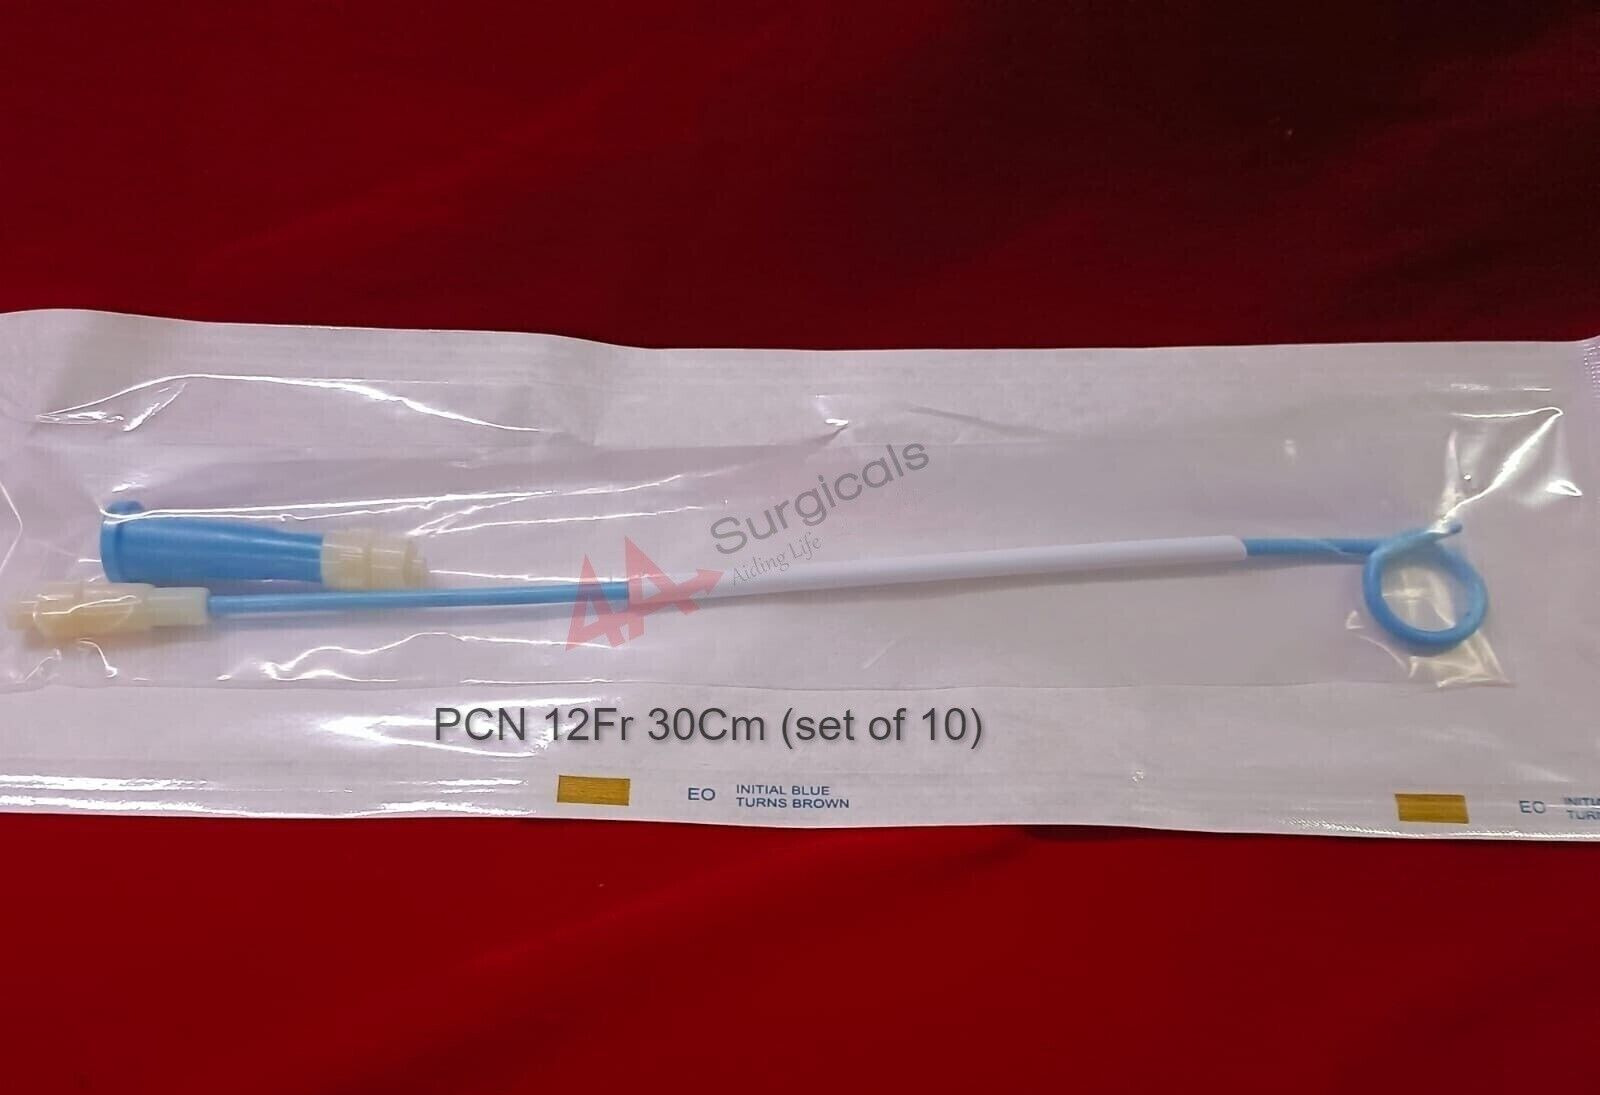 4A PIGTAIL  PCN 12Fr 30Cm (set of 10) Sterilised UROLOGY